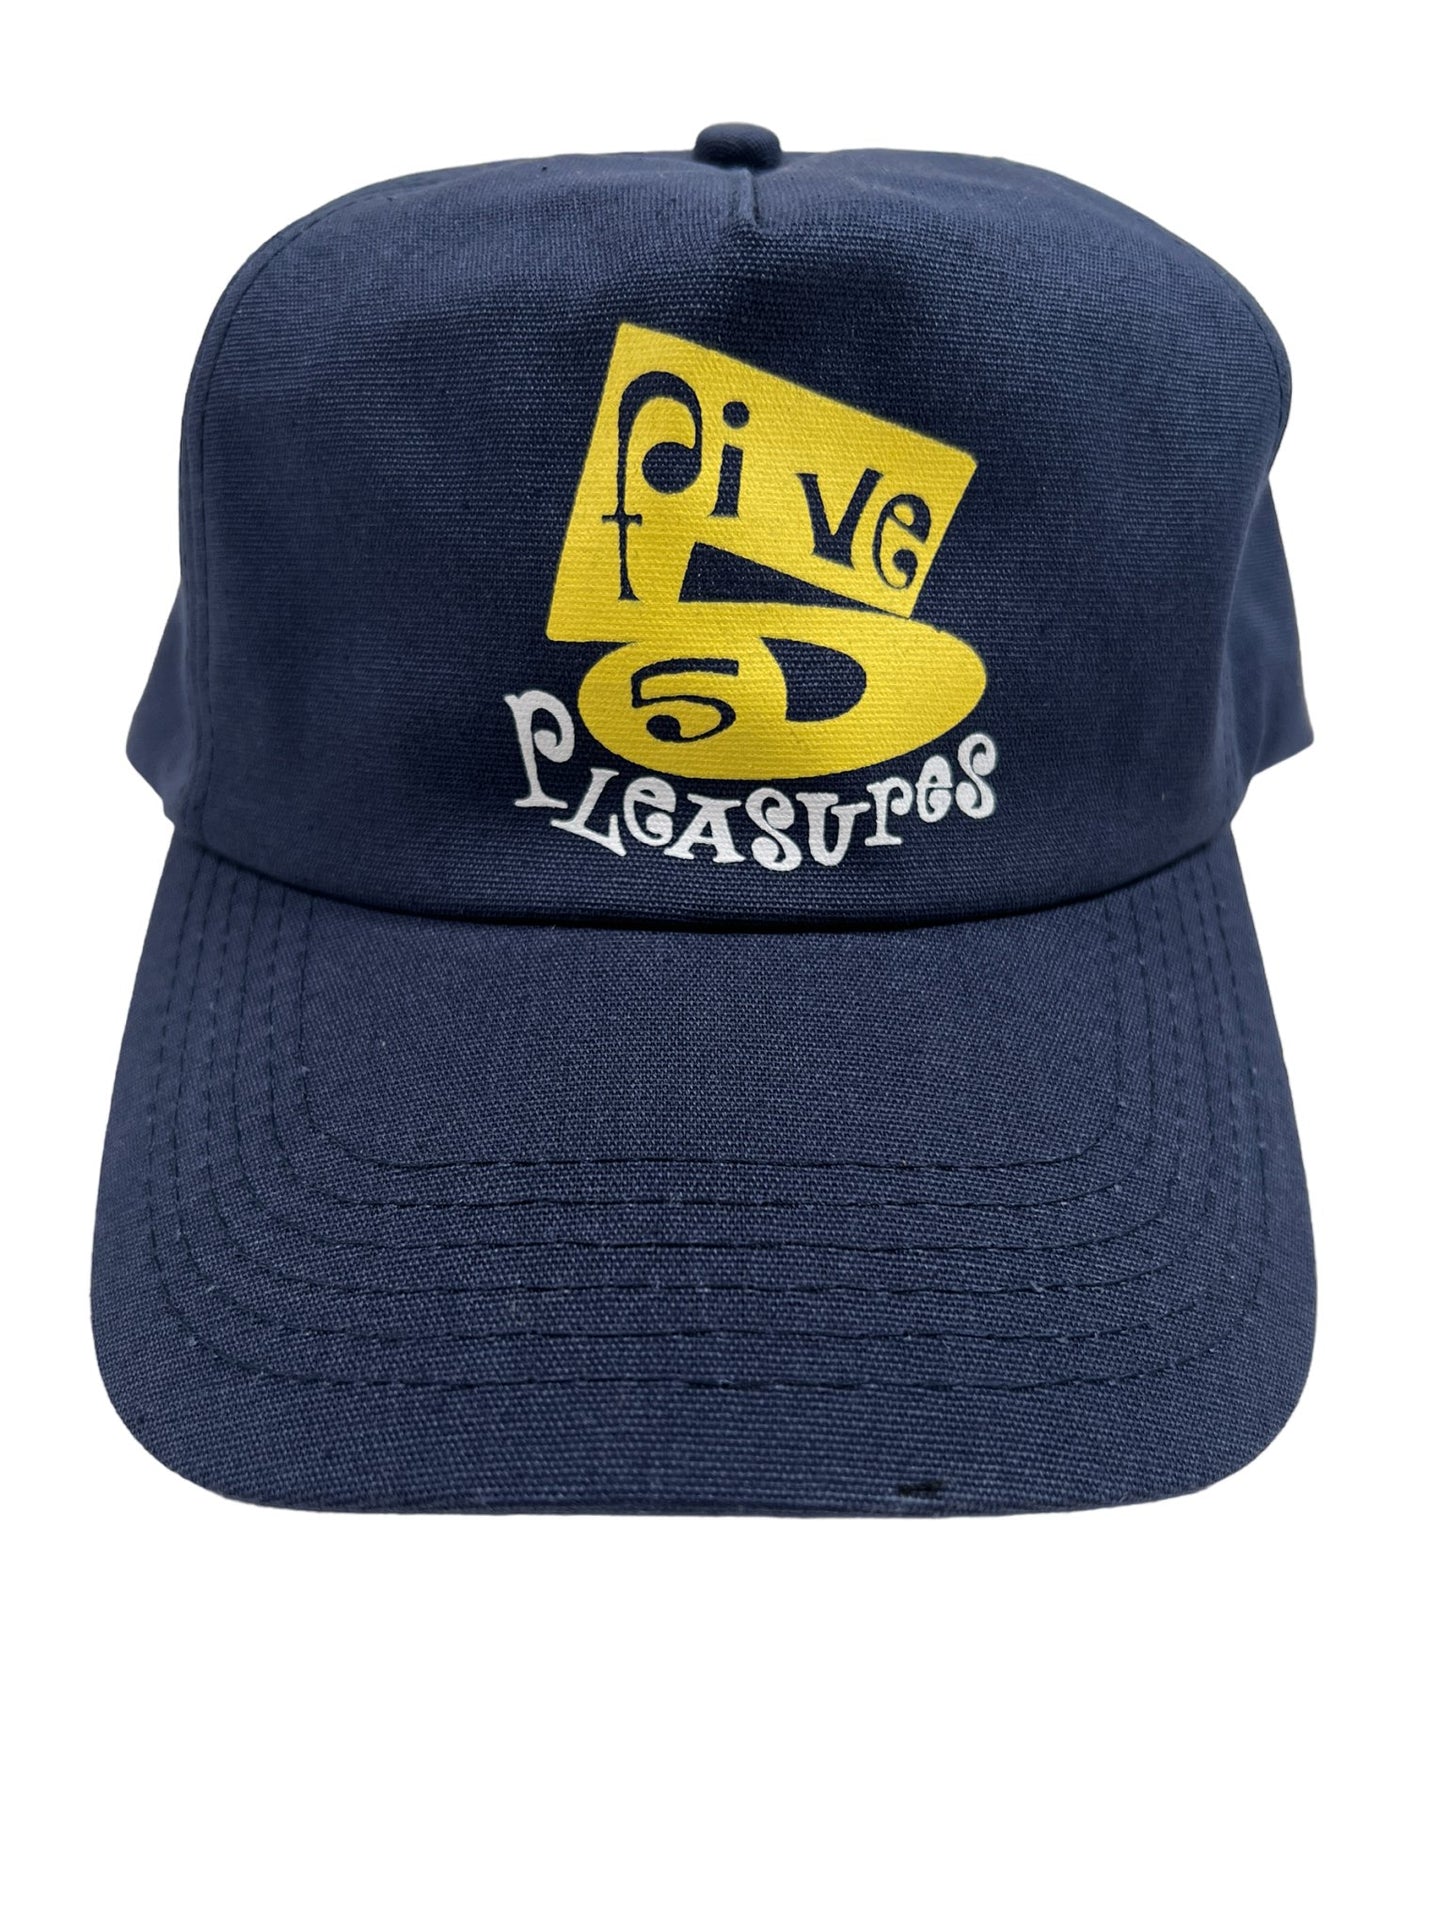 Probus NYC - New Pleasures Mona Lisa hat 🧢 available now